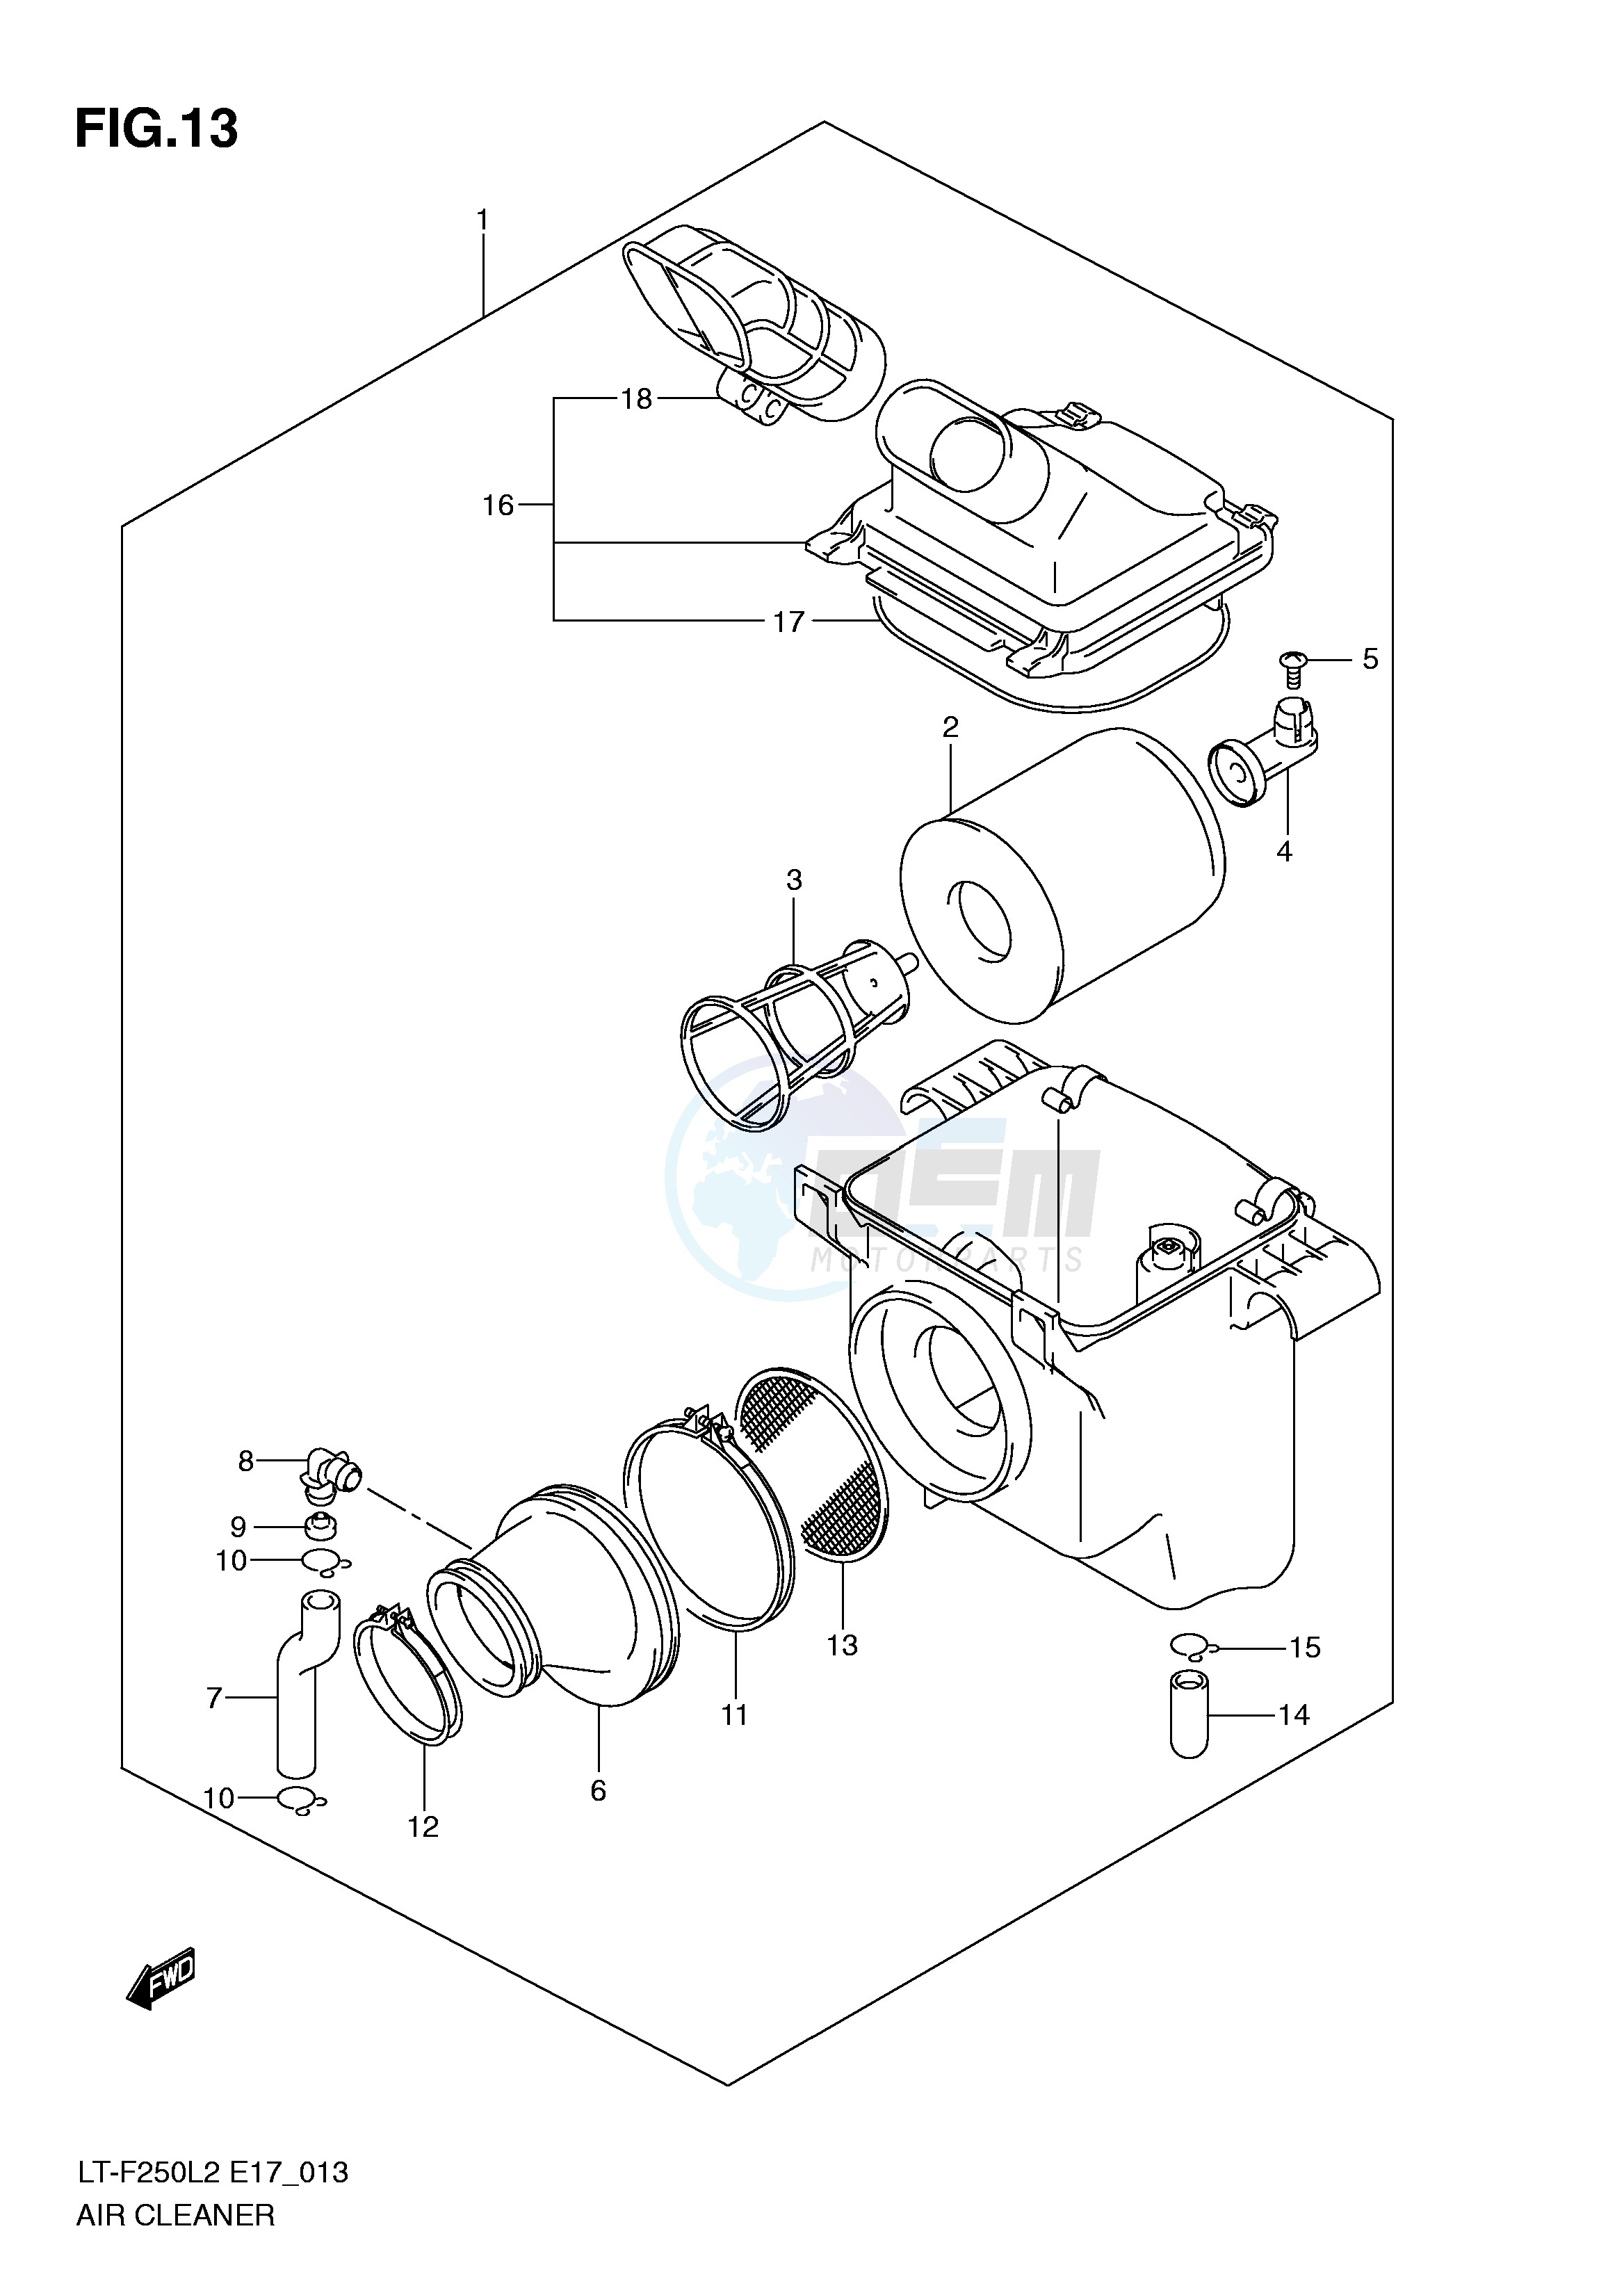 AIR CLEANER (LT-F250L2 E24) blueprint